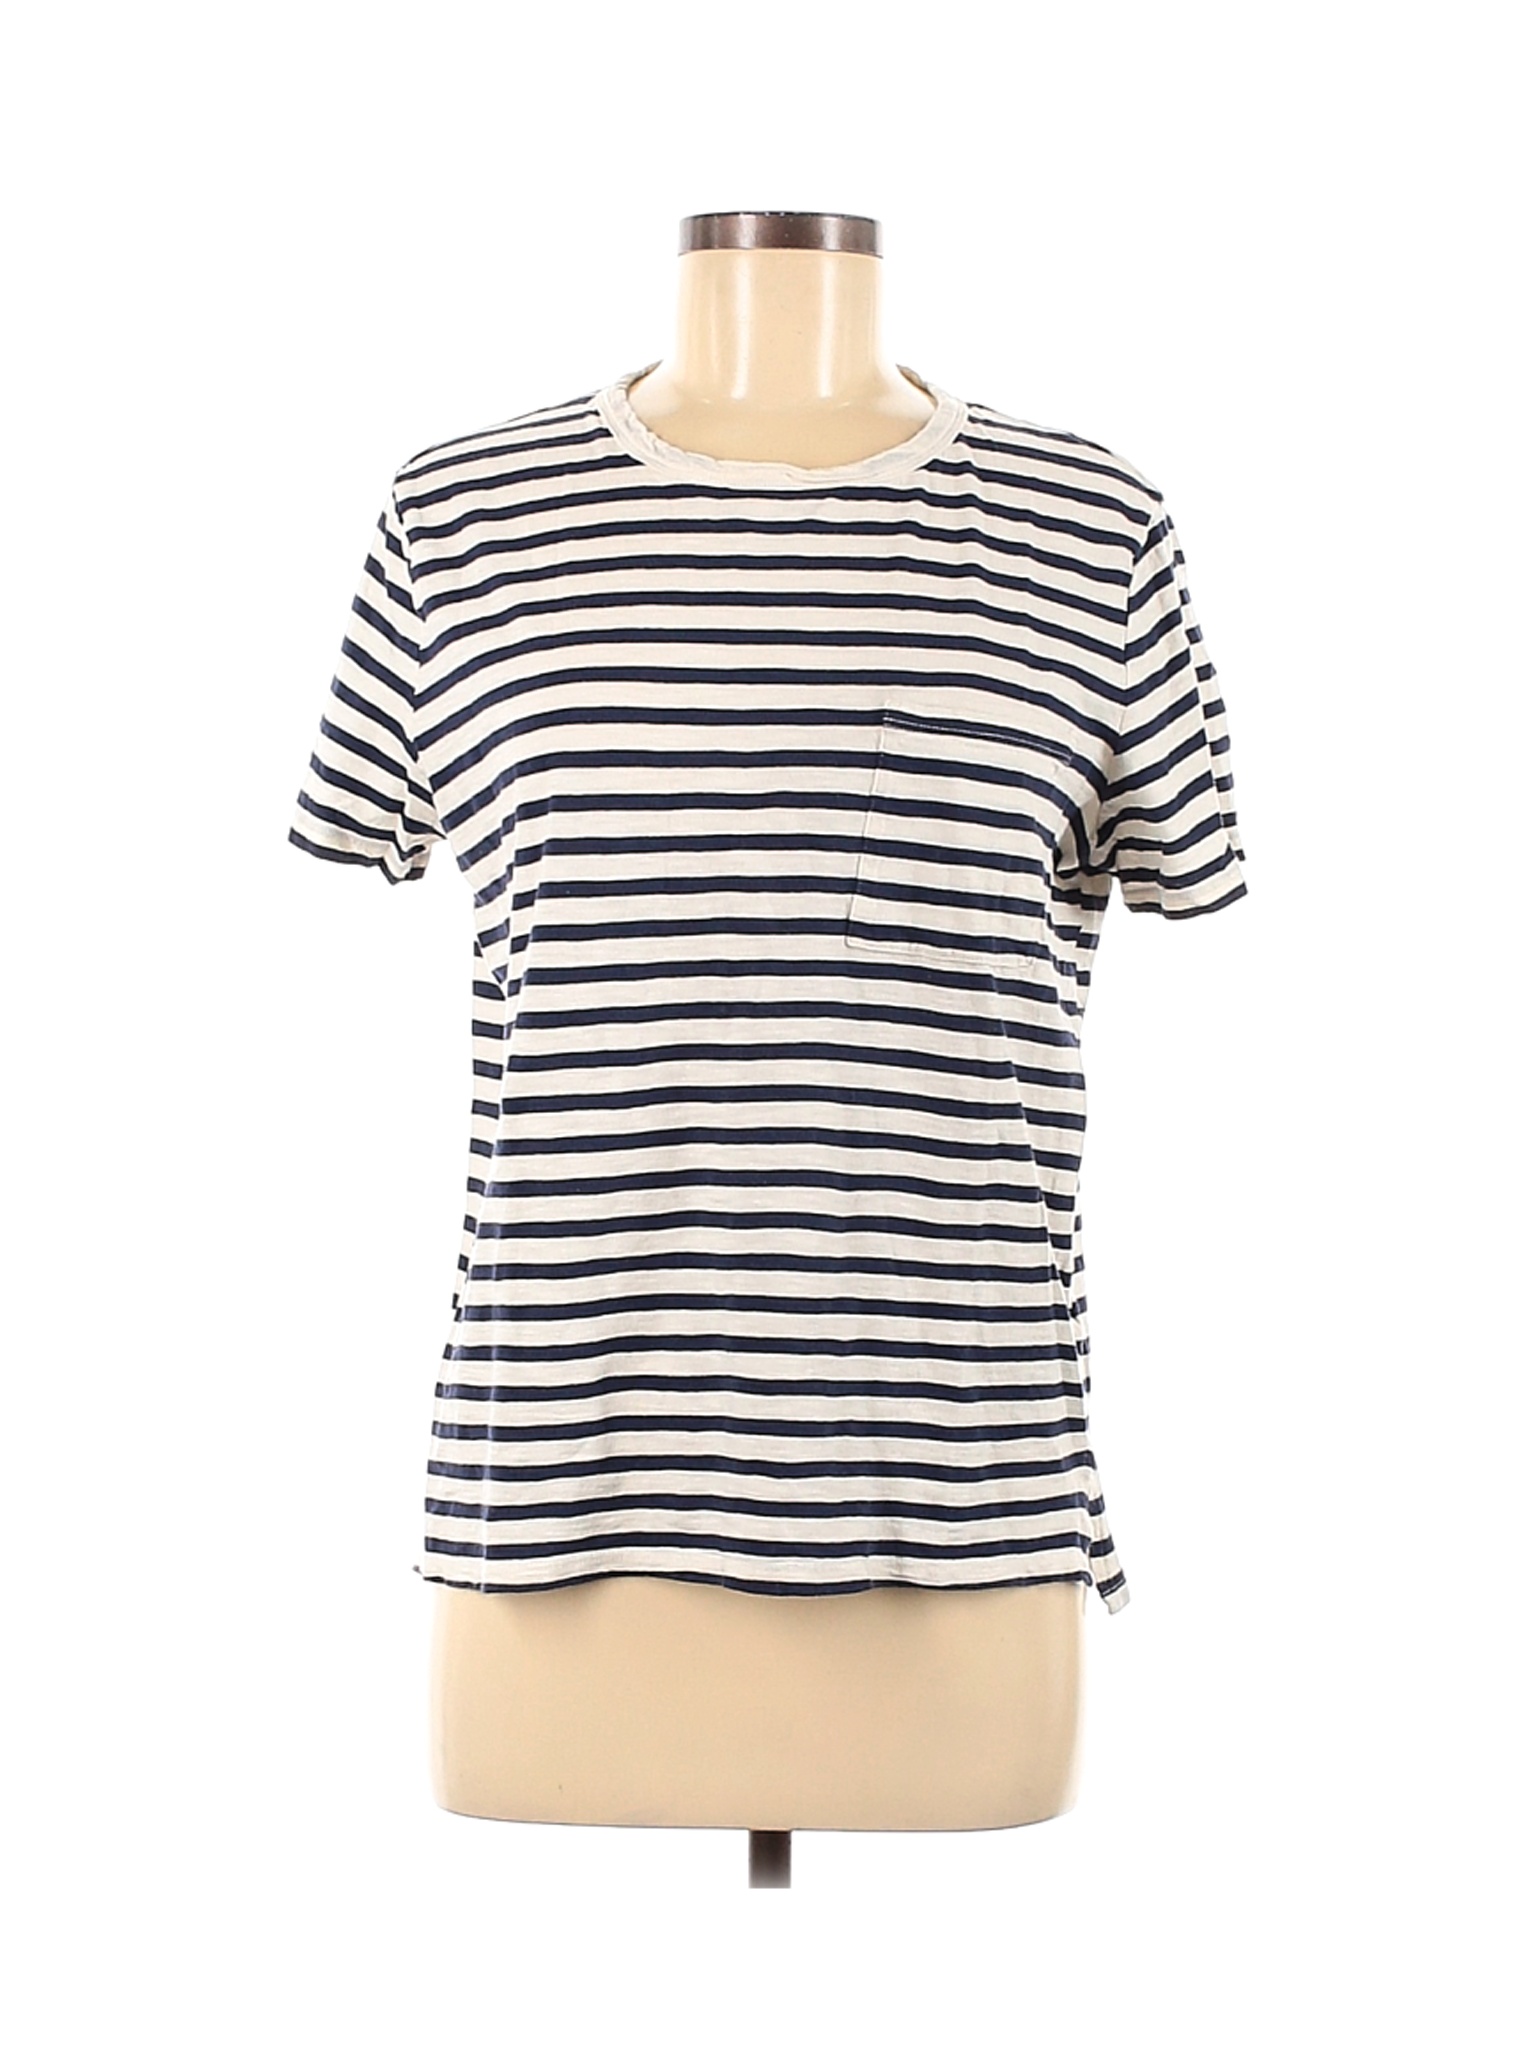 Old Navy Women White Short Sleeve T-Shirt M | eBay